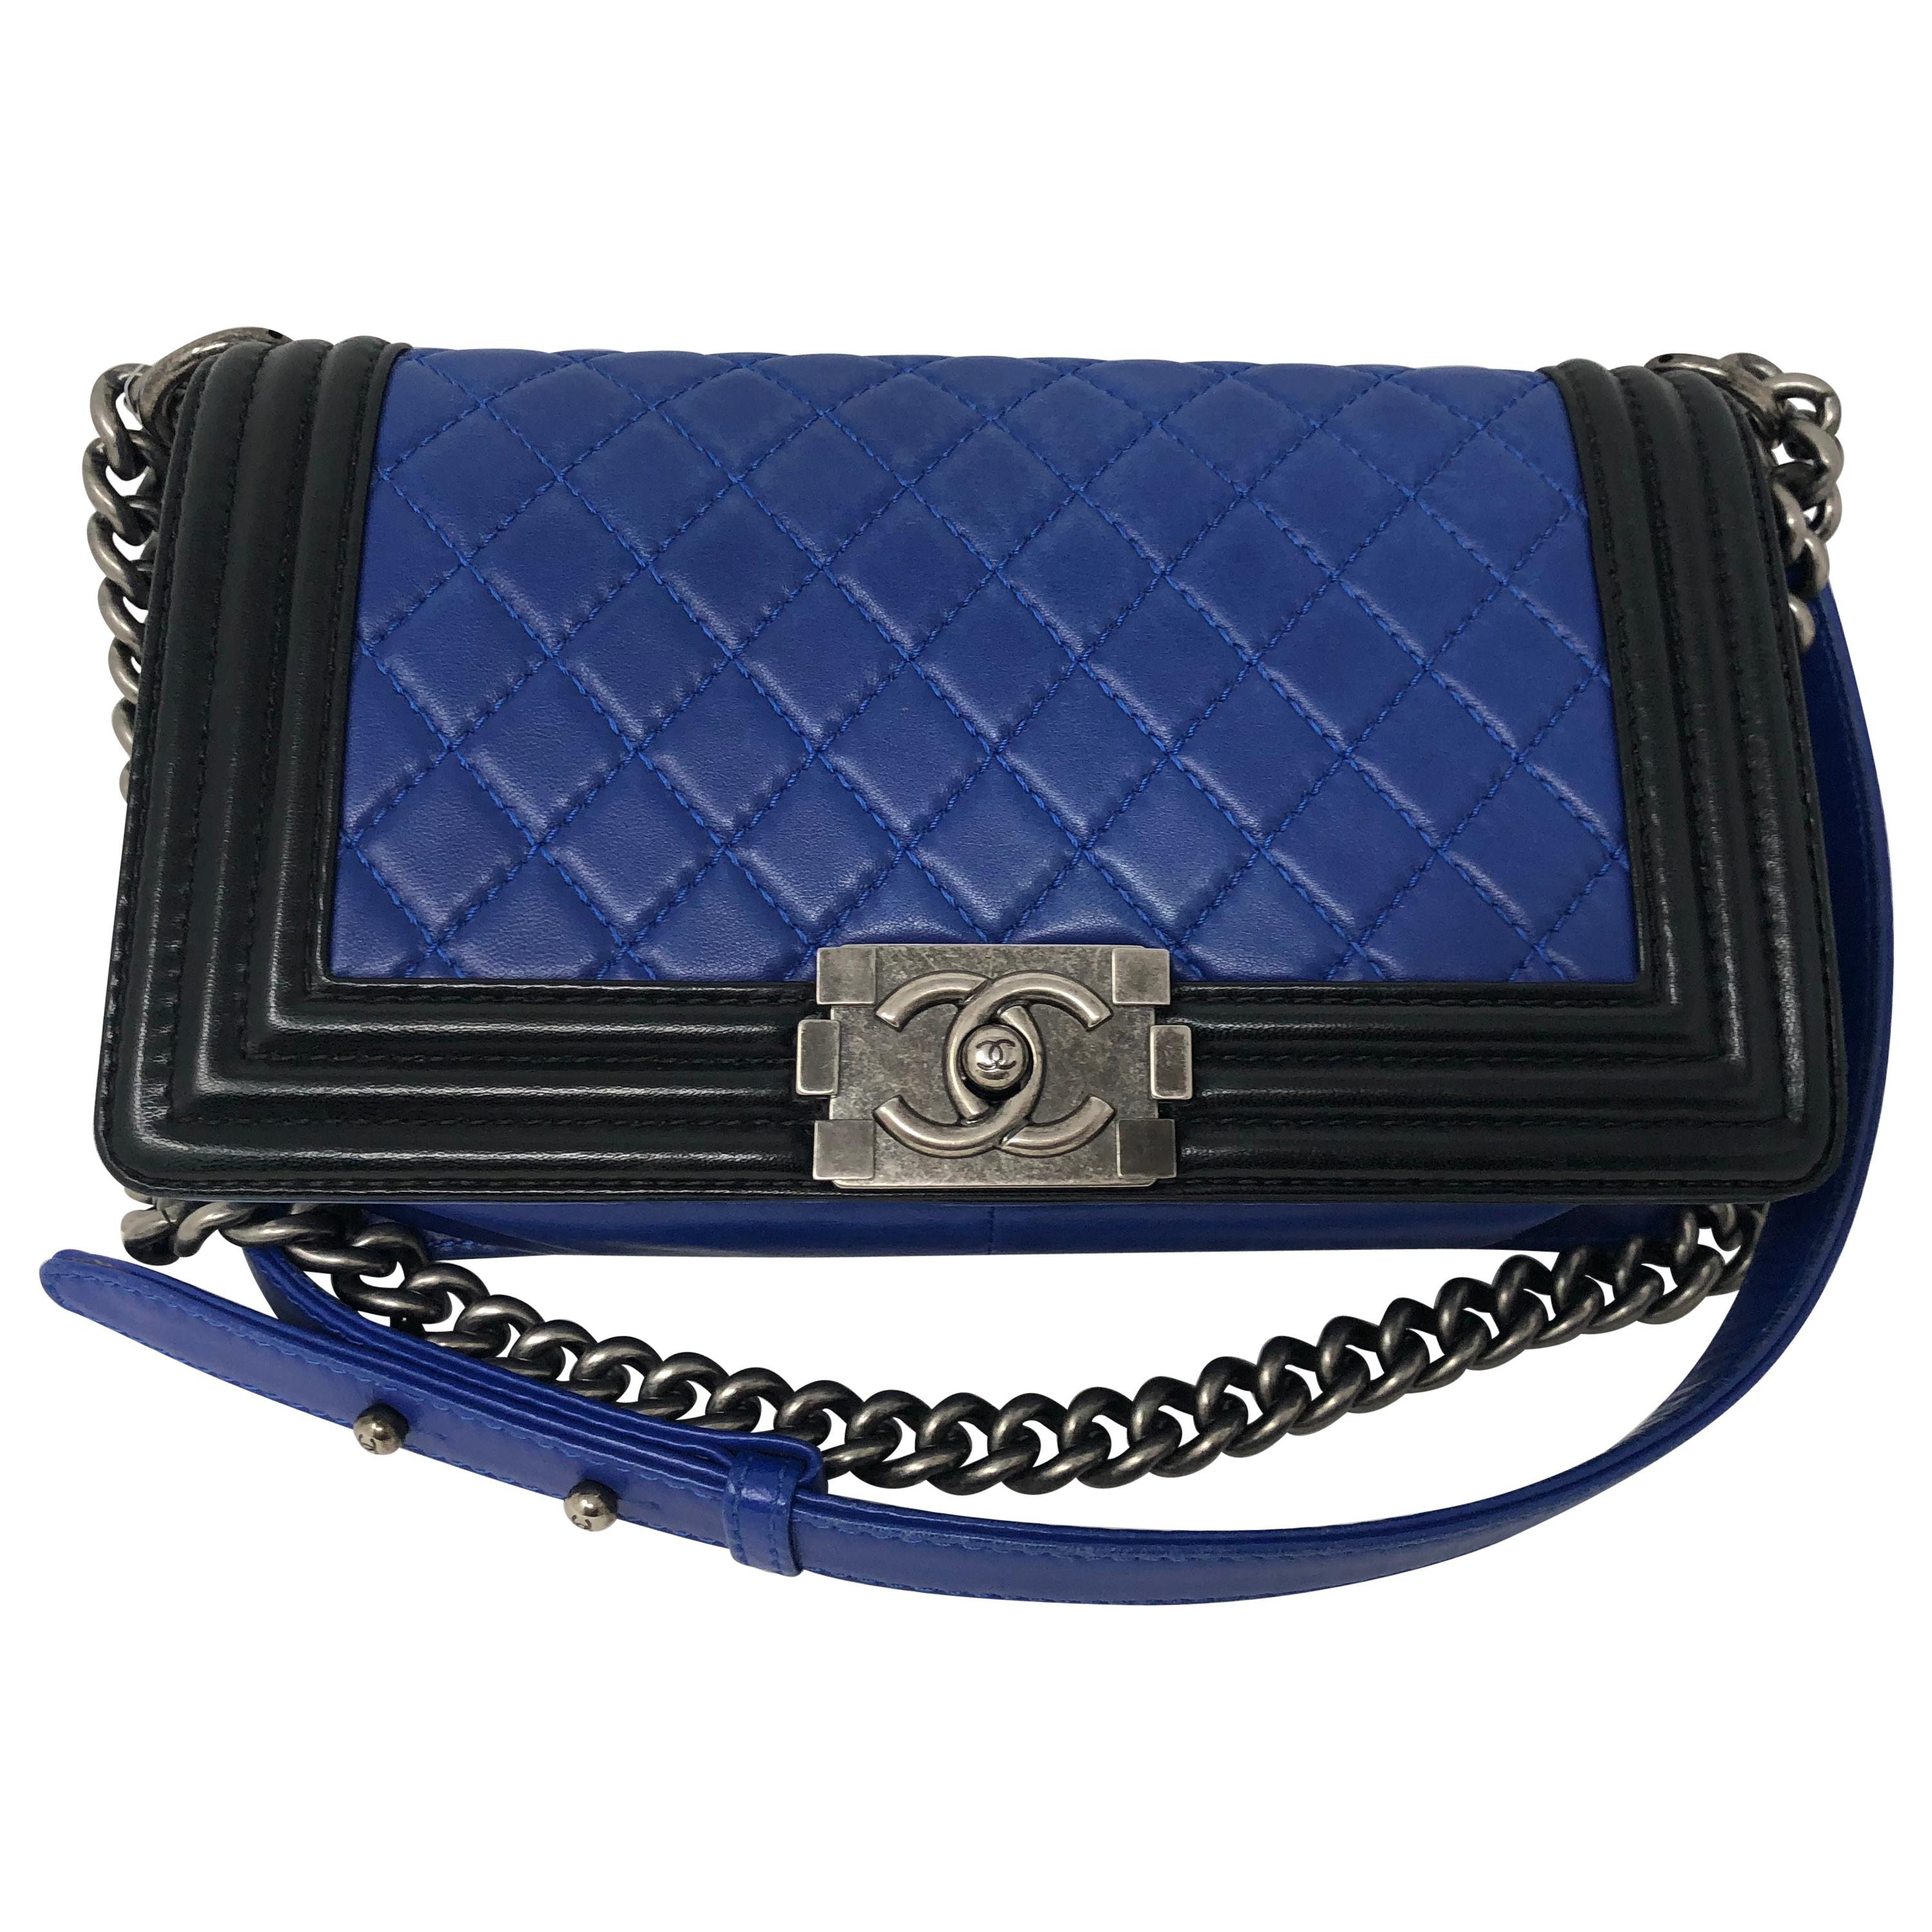 Chanel Black and Blue Boy Bag 